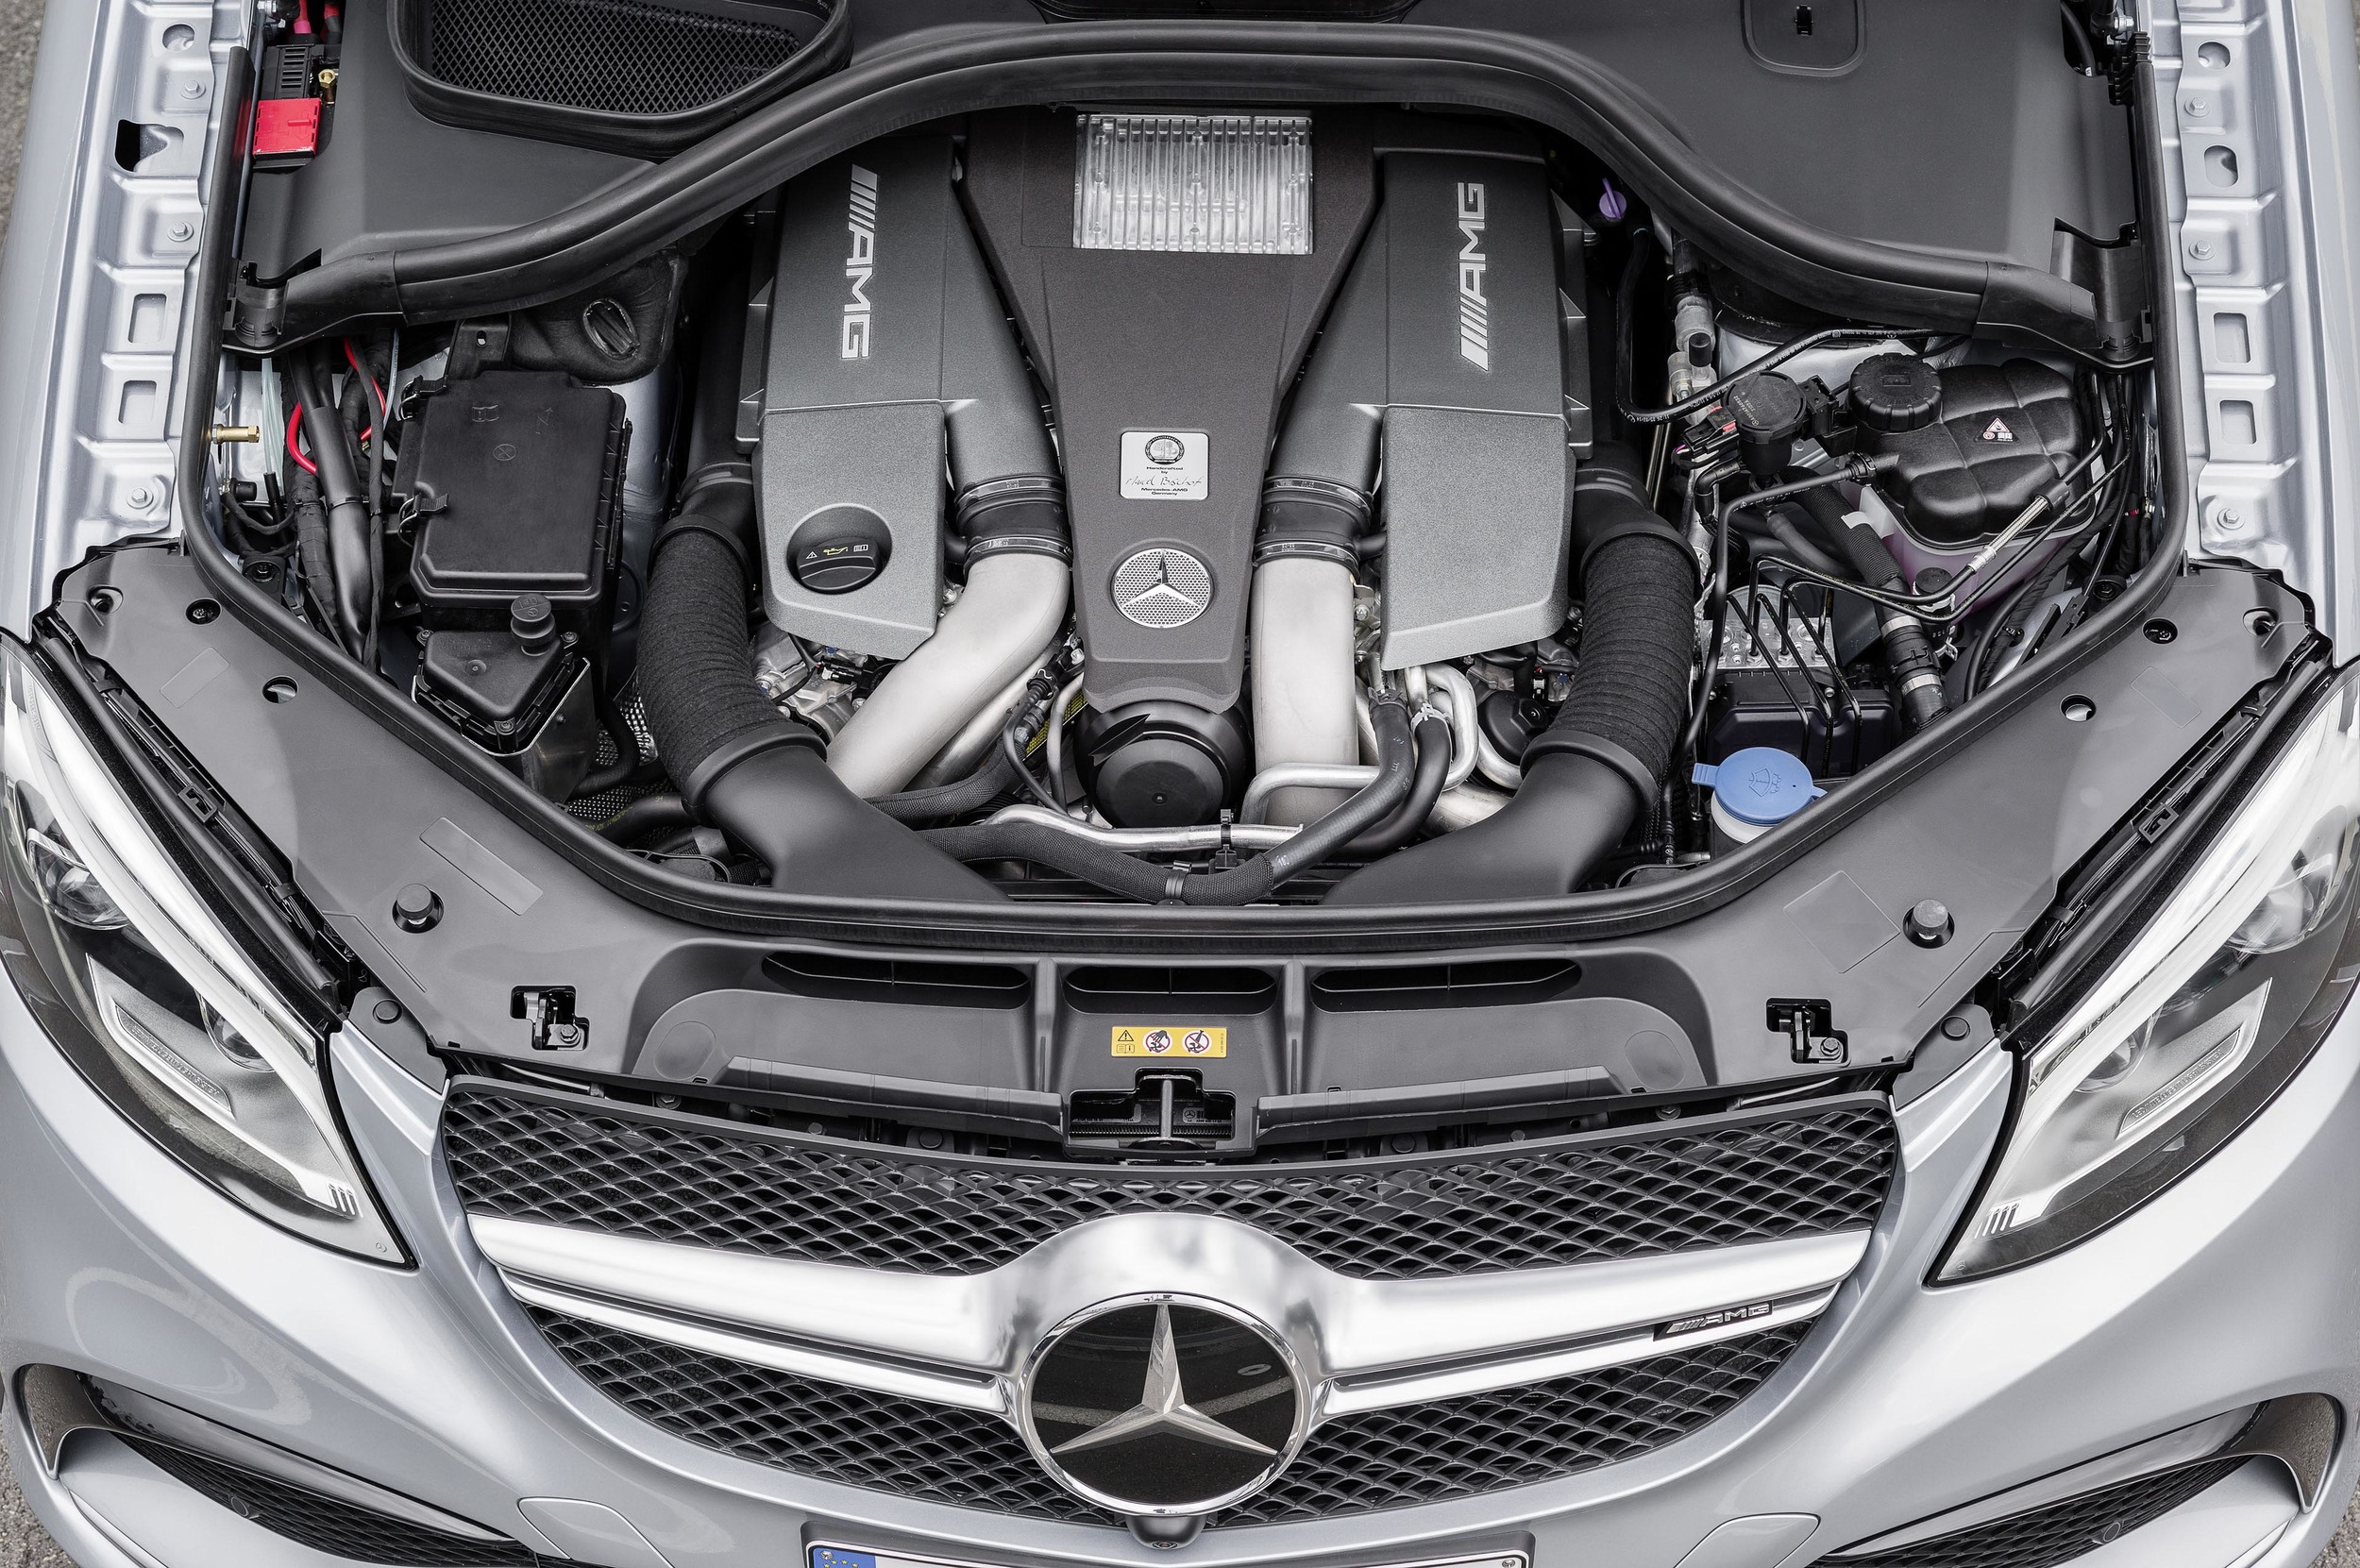 2016 Mercedes S Class - Engine